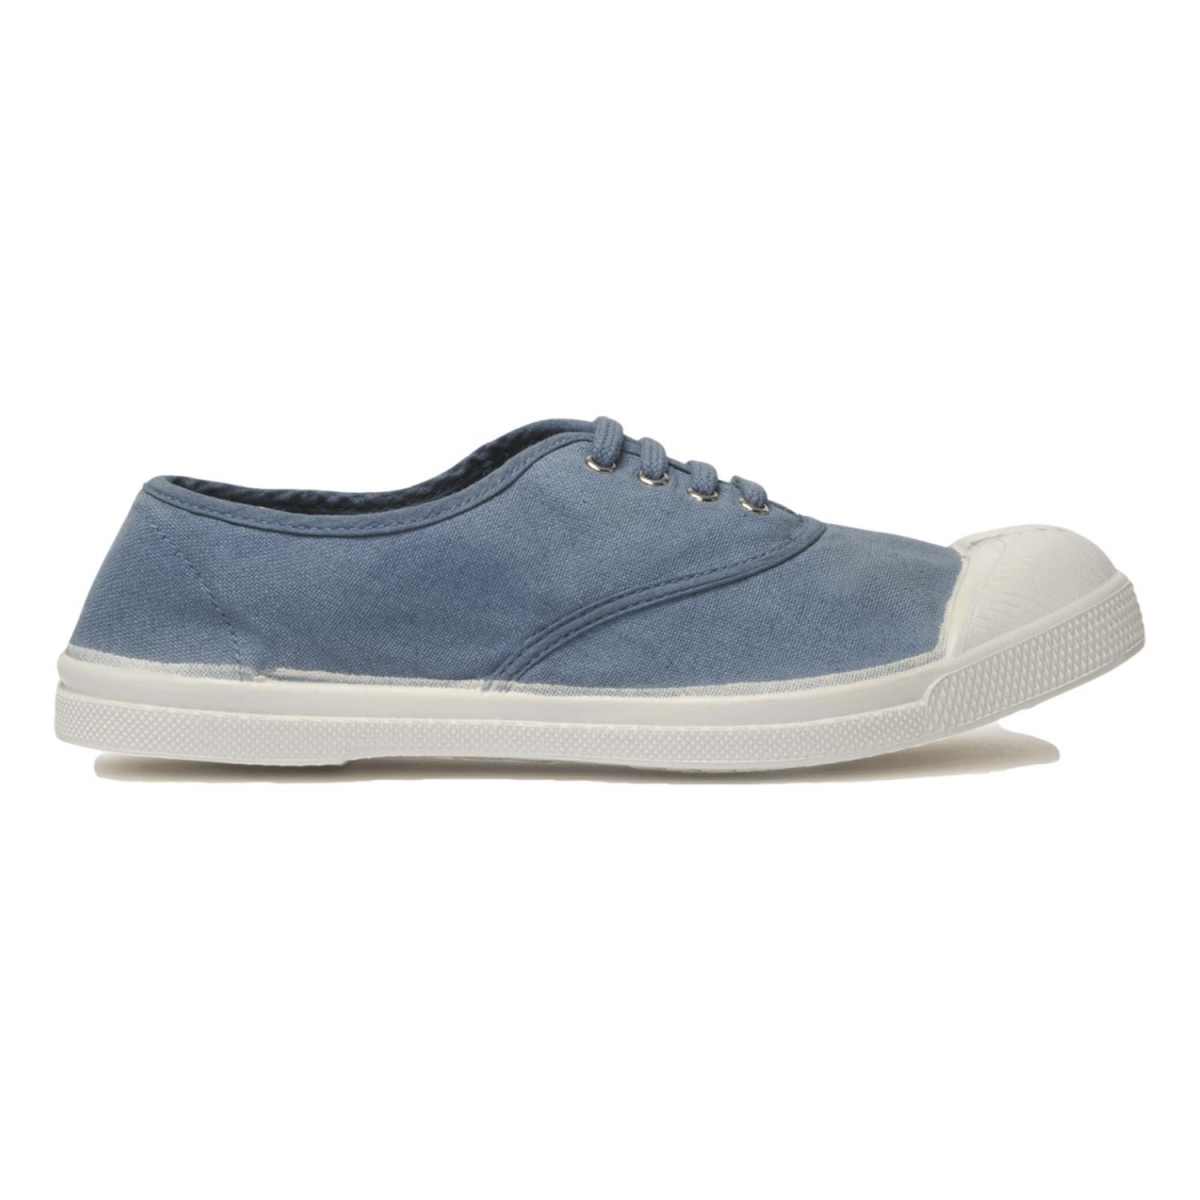 Bensimon Lace tennis sneakers adult denim blue F15004 - 0563